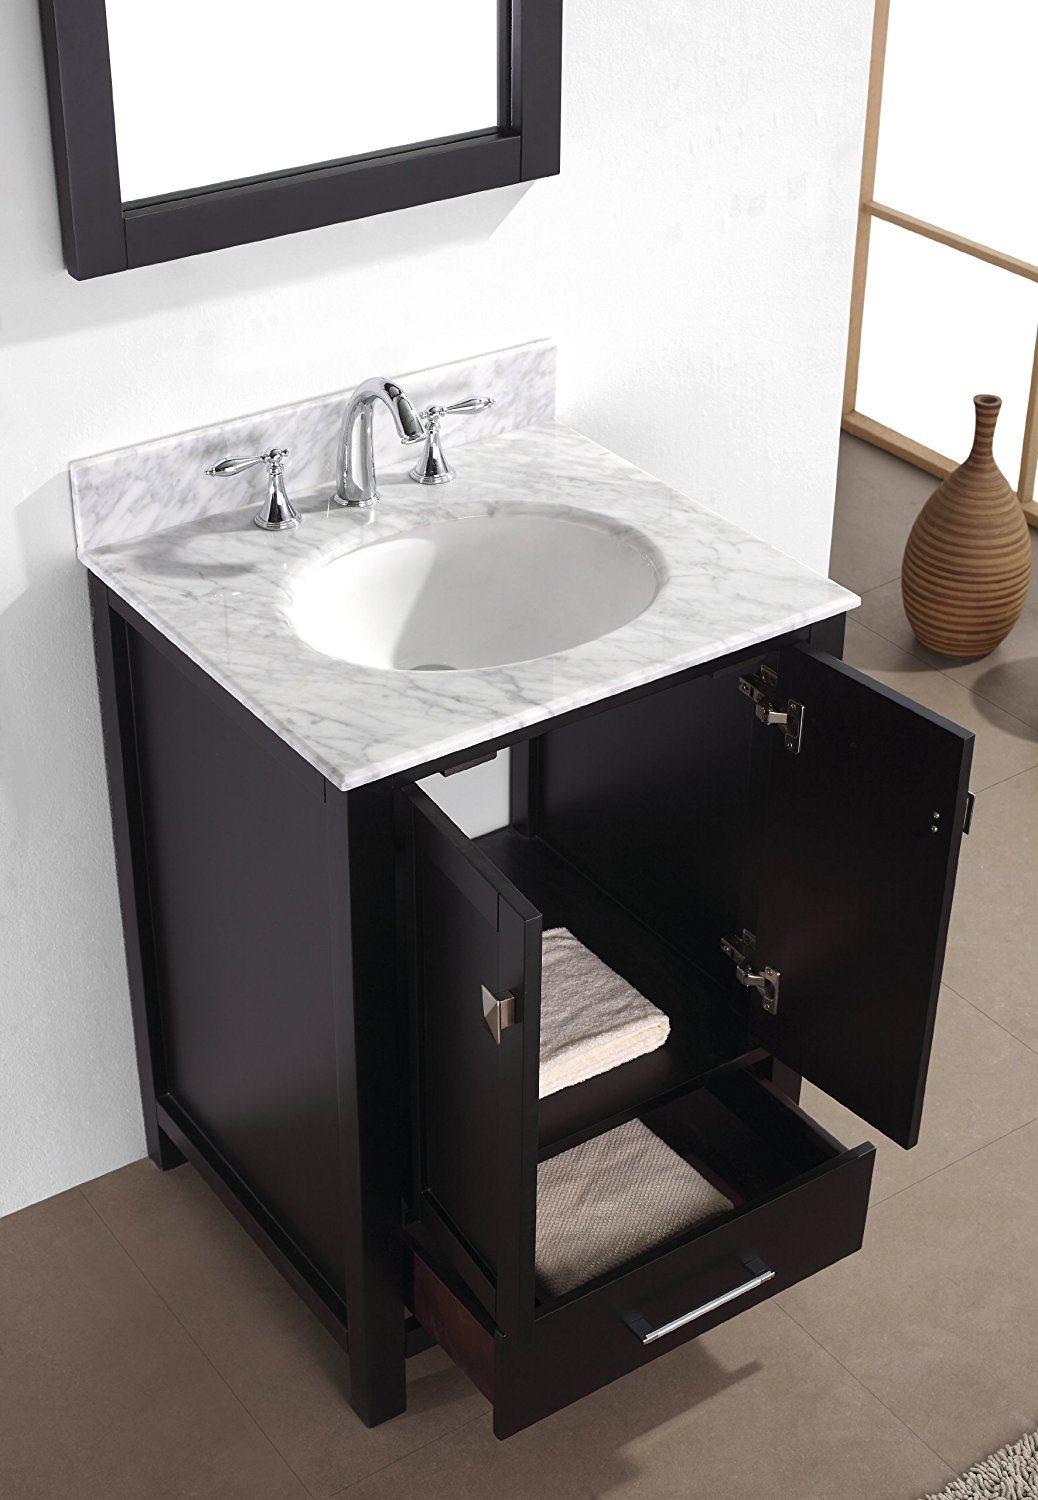 24 Inch White Solid Wood Bathroom Cabinet Free Standing Vanity